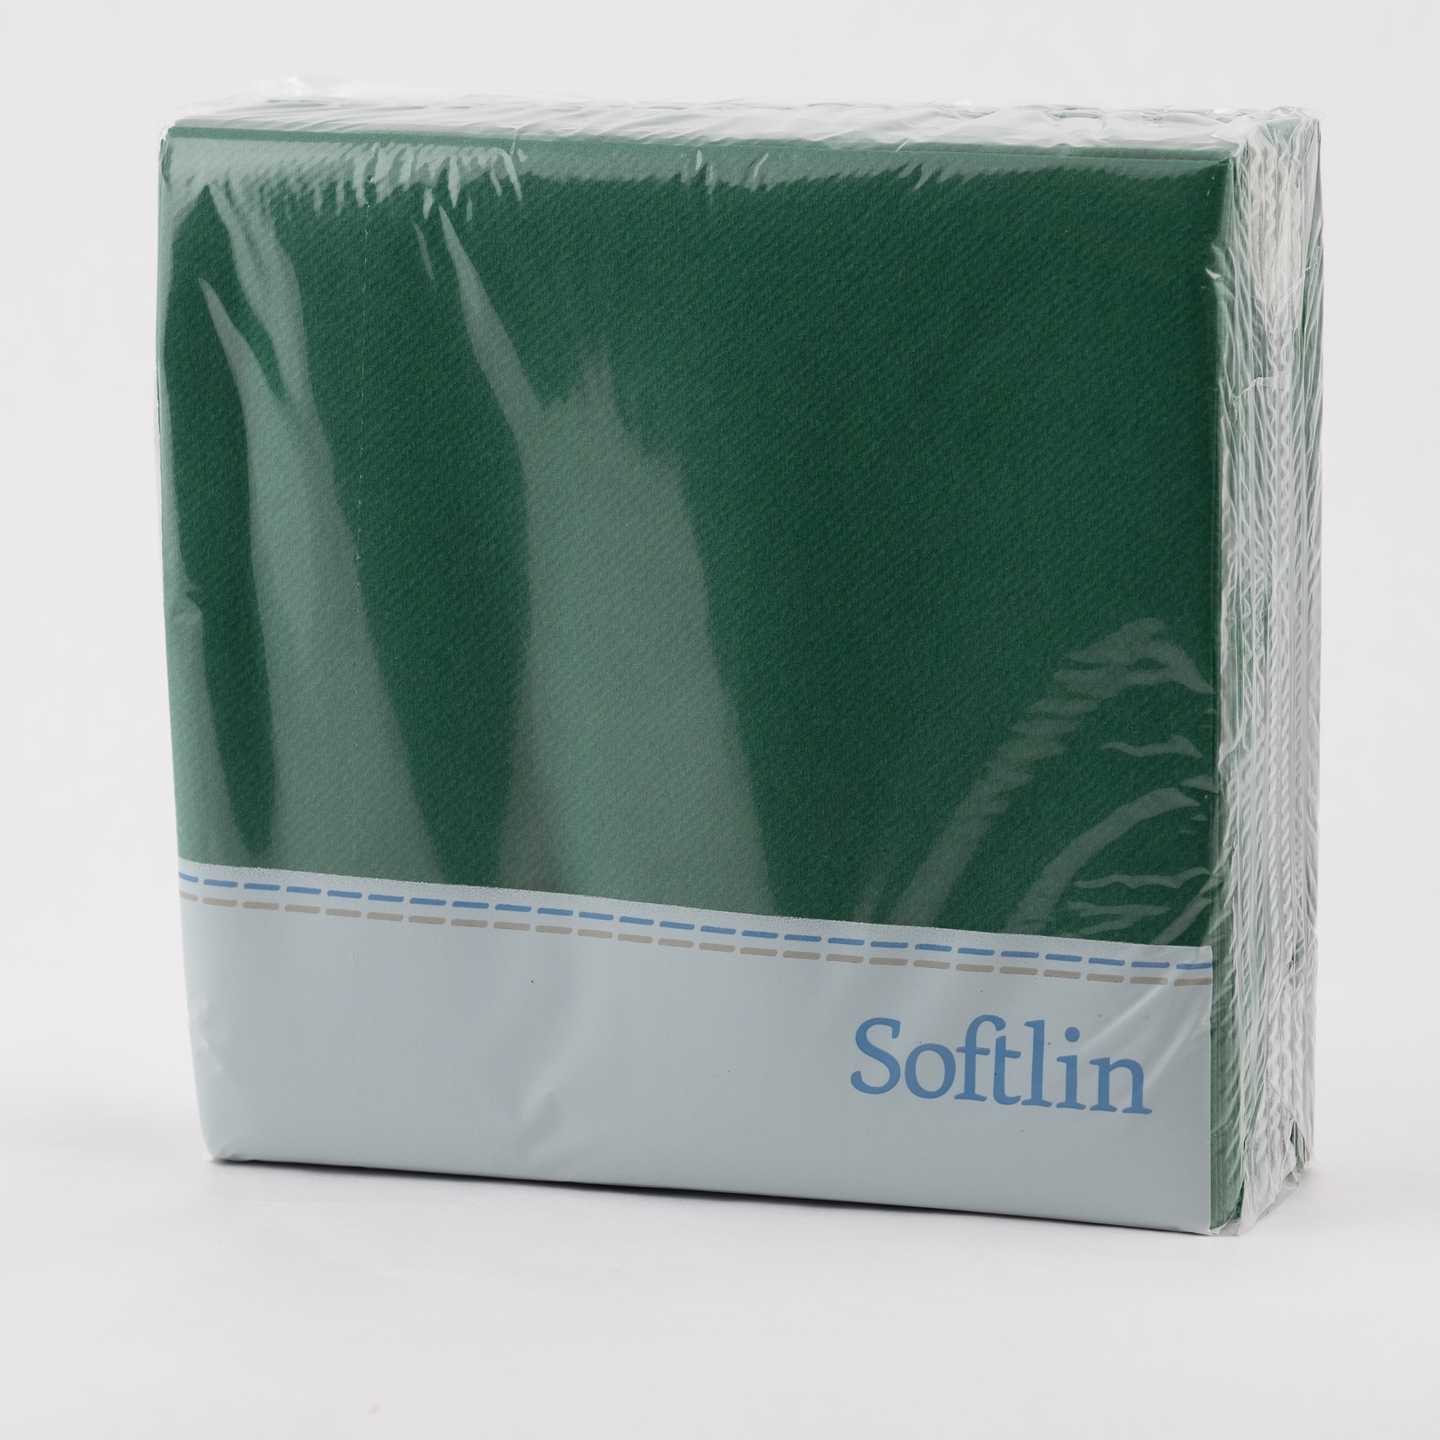 Softlin Classic havu lautasliina 39cm 1-krs 1/4 50kpl